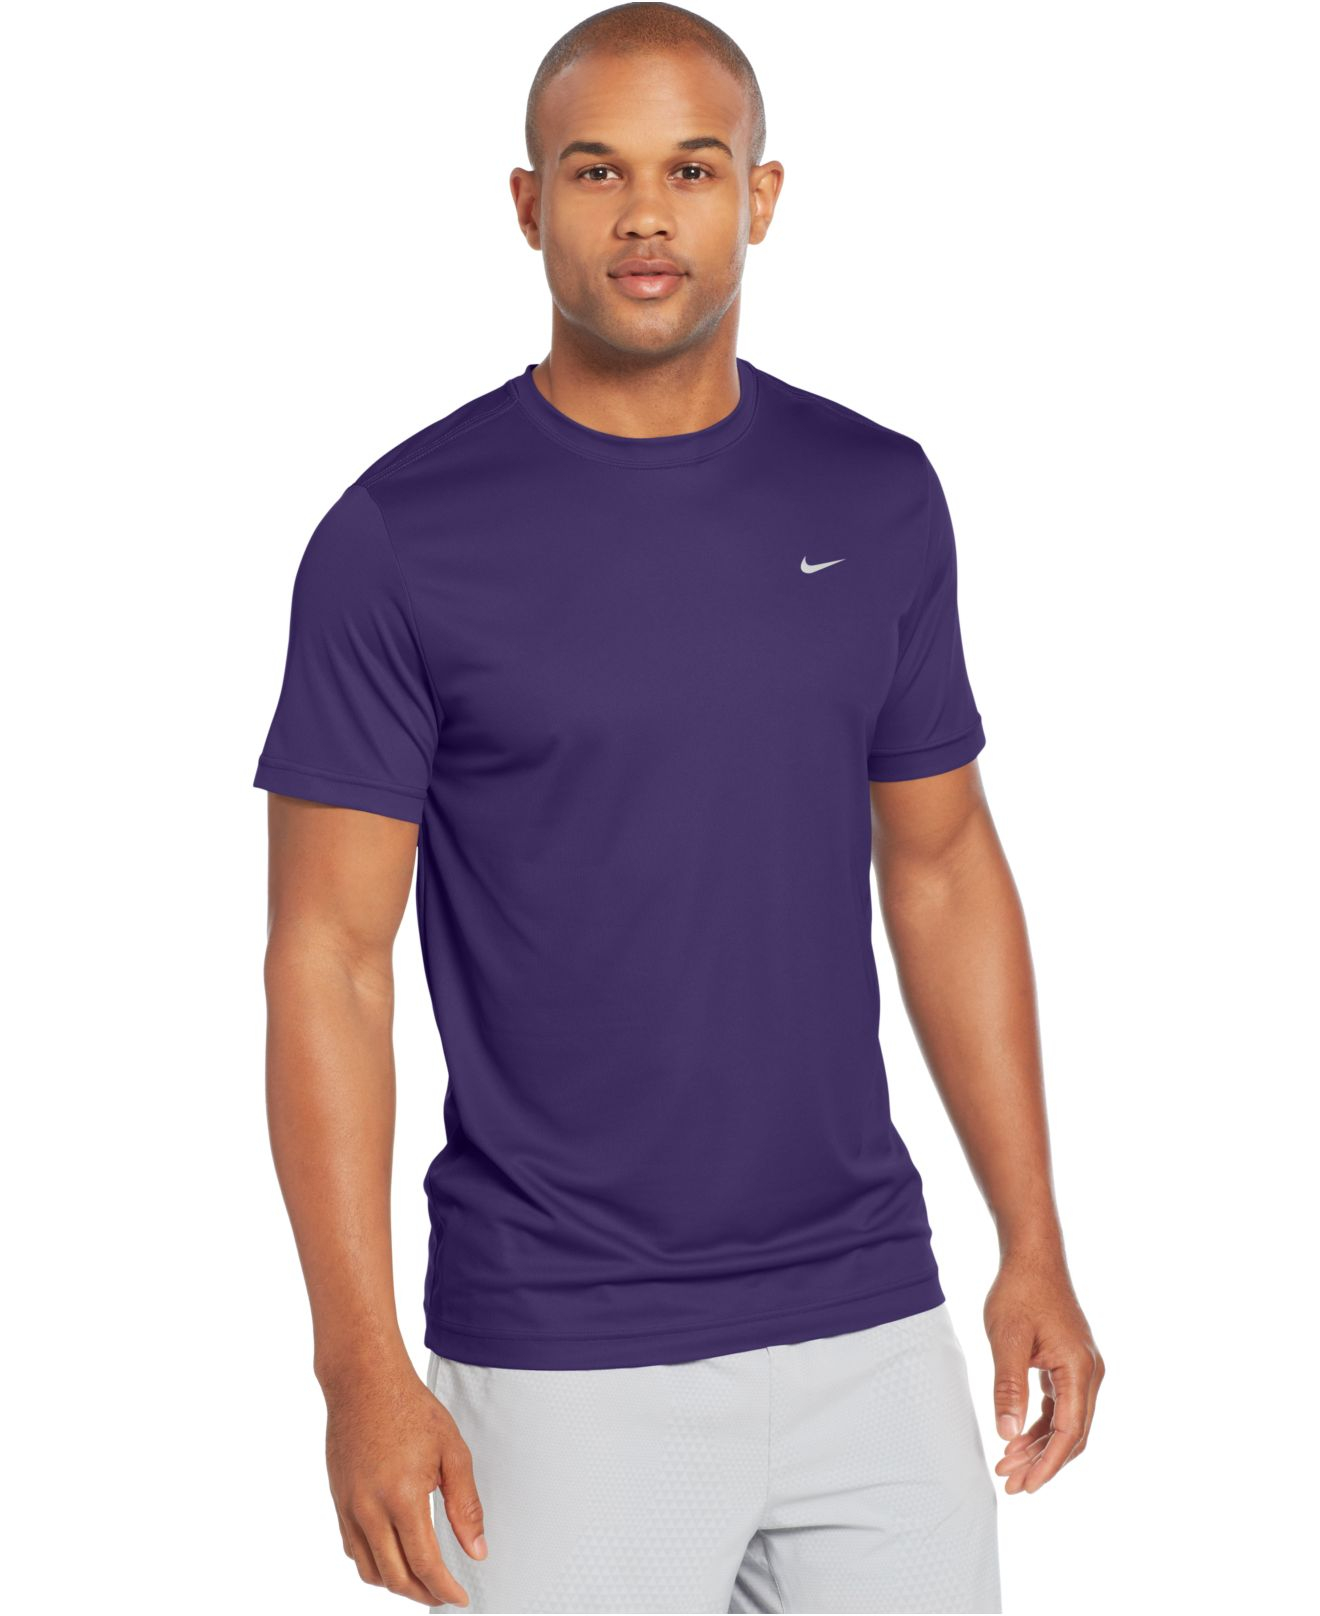 Nike Challenger Dri-Fit Mesh T-Shirt in 